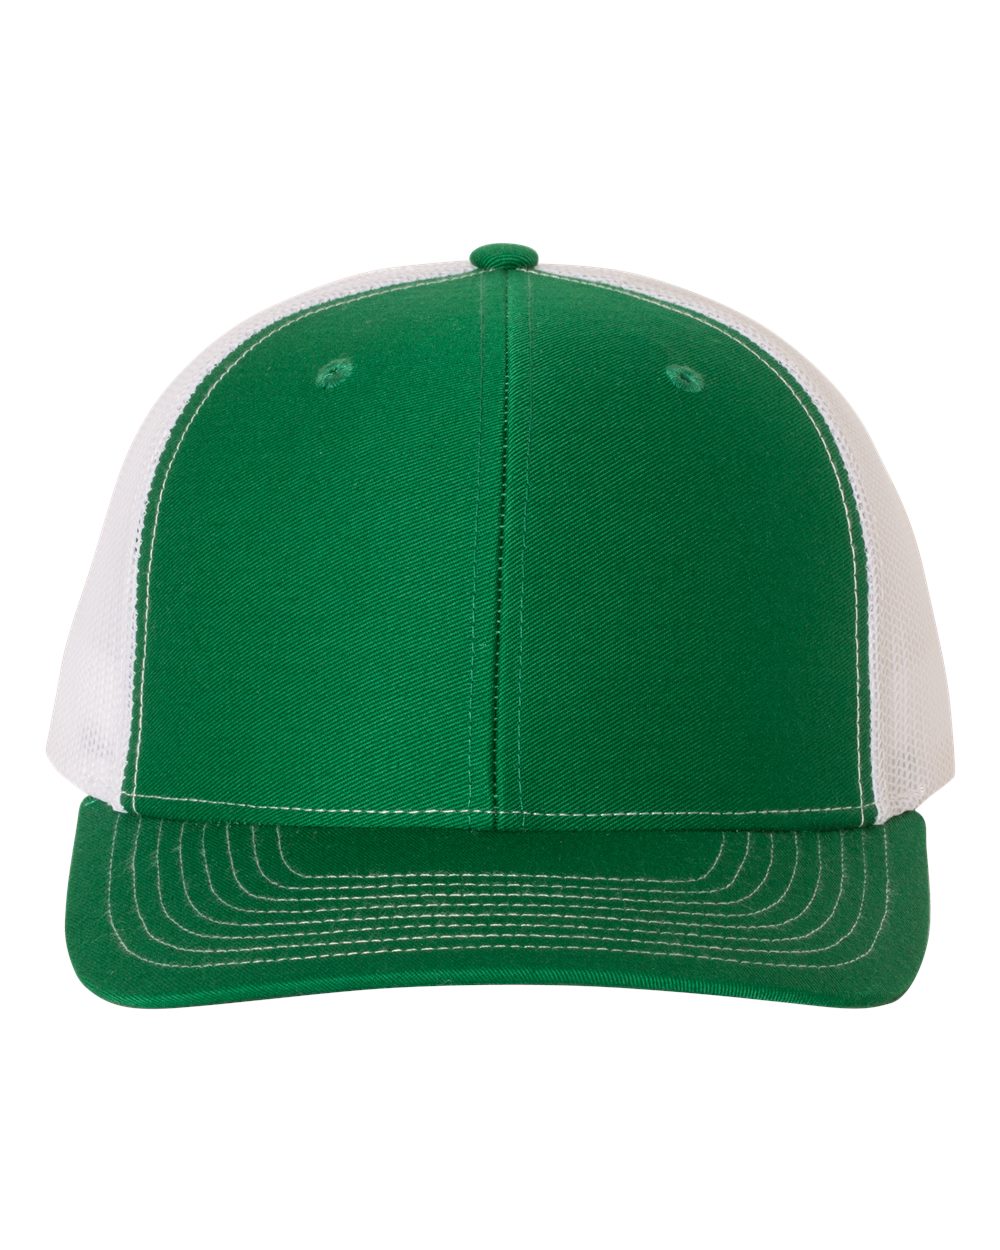 Richardson Snapback Trucker Hat (112) in Kelly/White